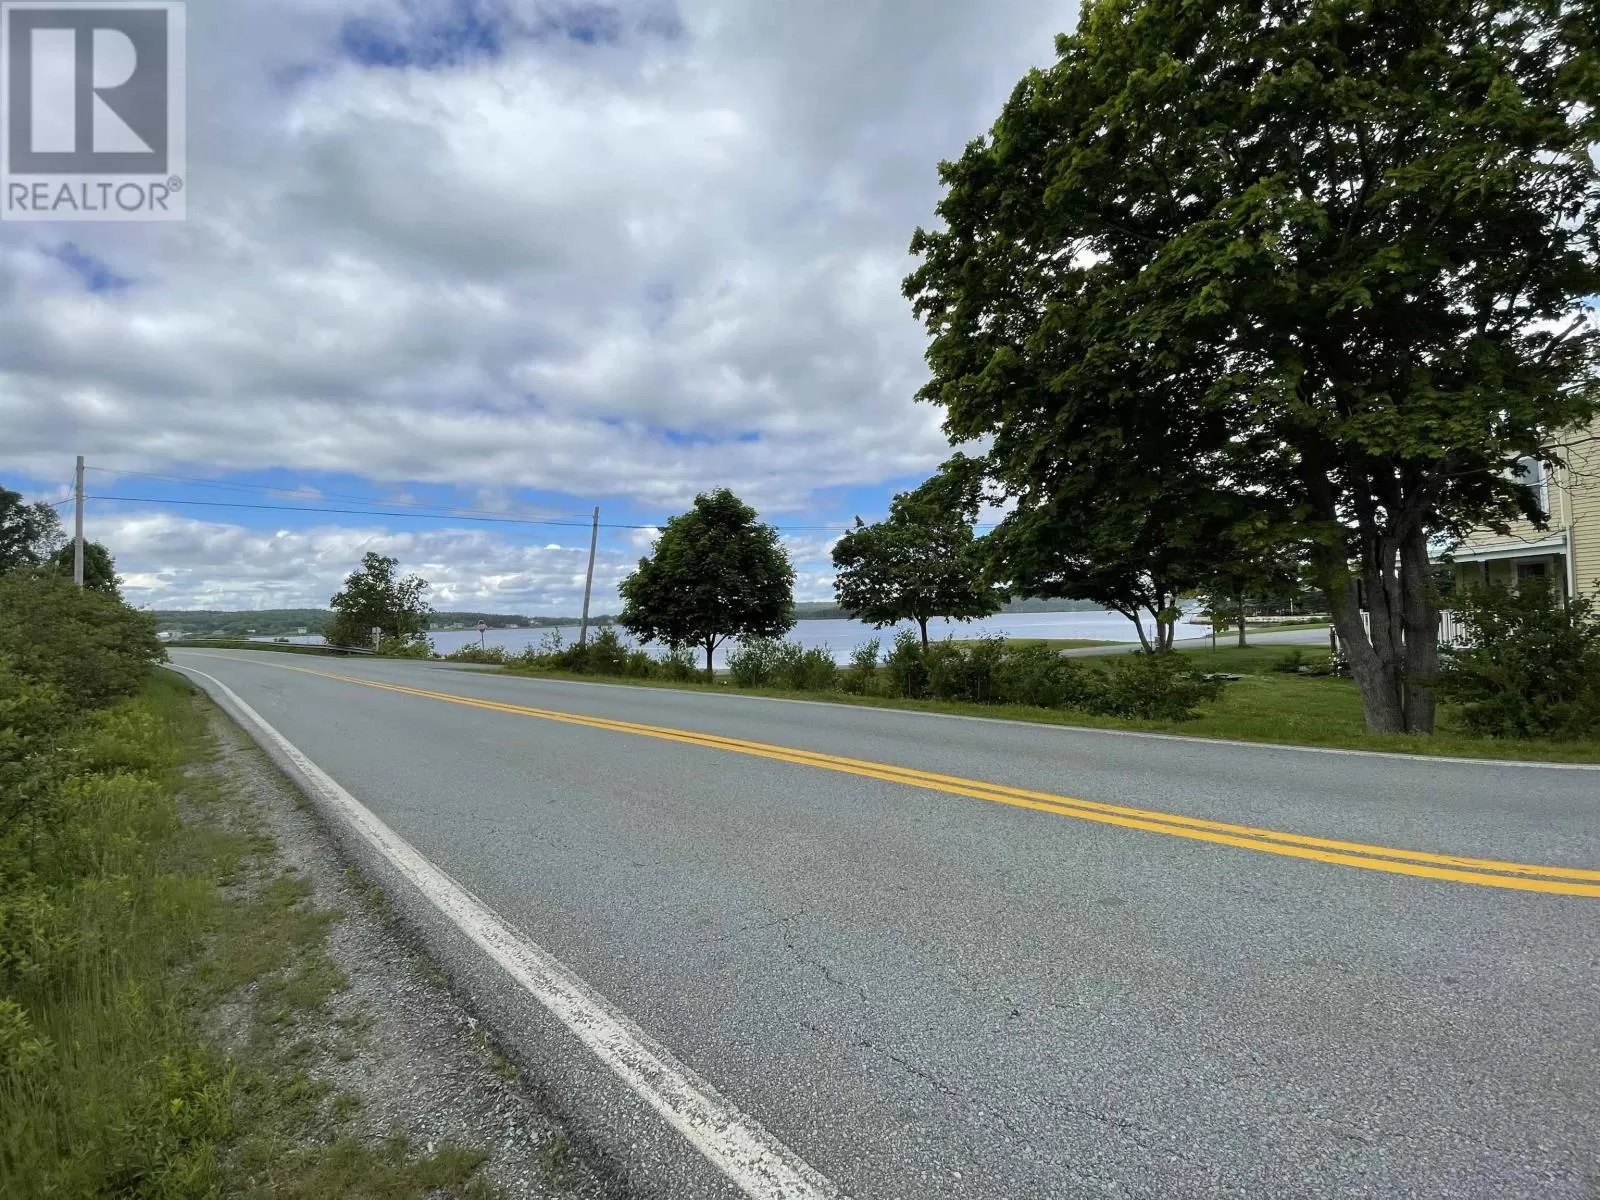 Lot Highway 331|pid#60723301/60611274, Lahave, Nova Scotia B0R 1C0